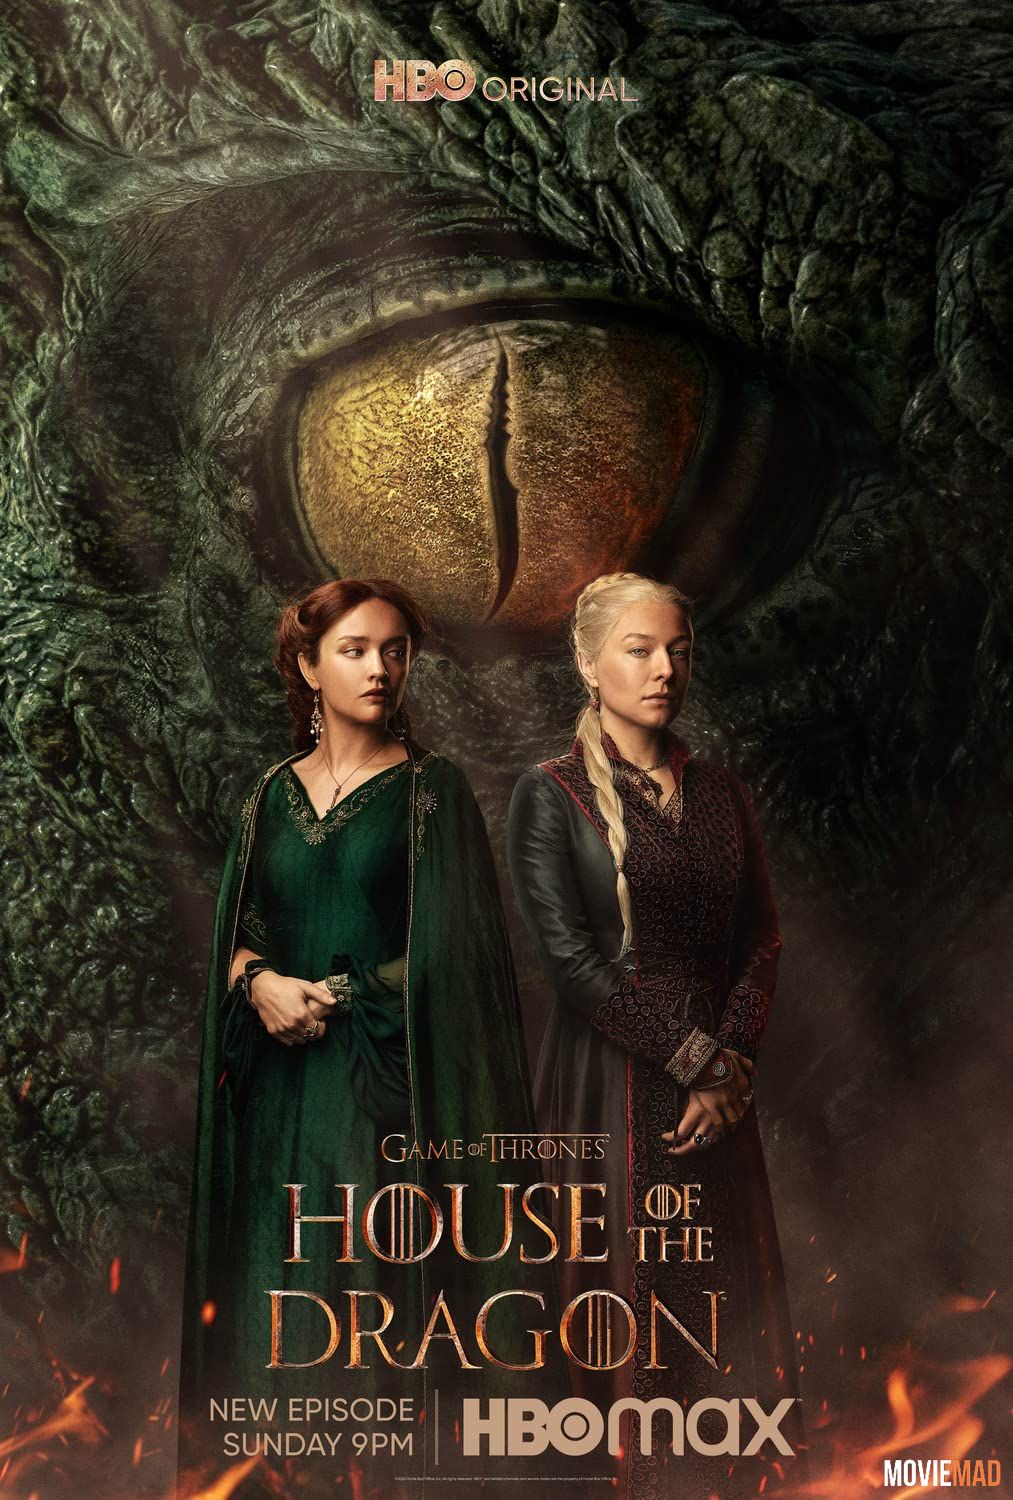 House Of The Dragon S01E08 (2022) English HBOMAX HDRip 720p 480p